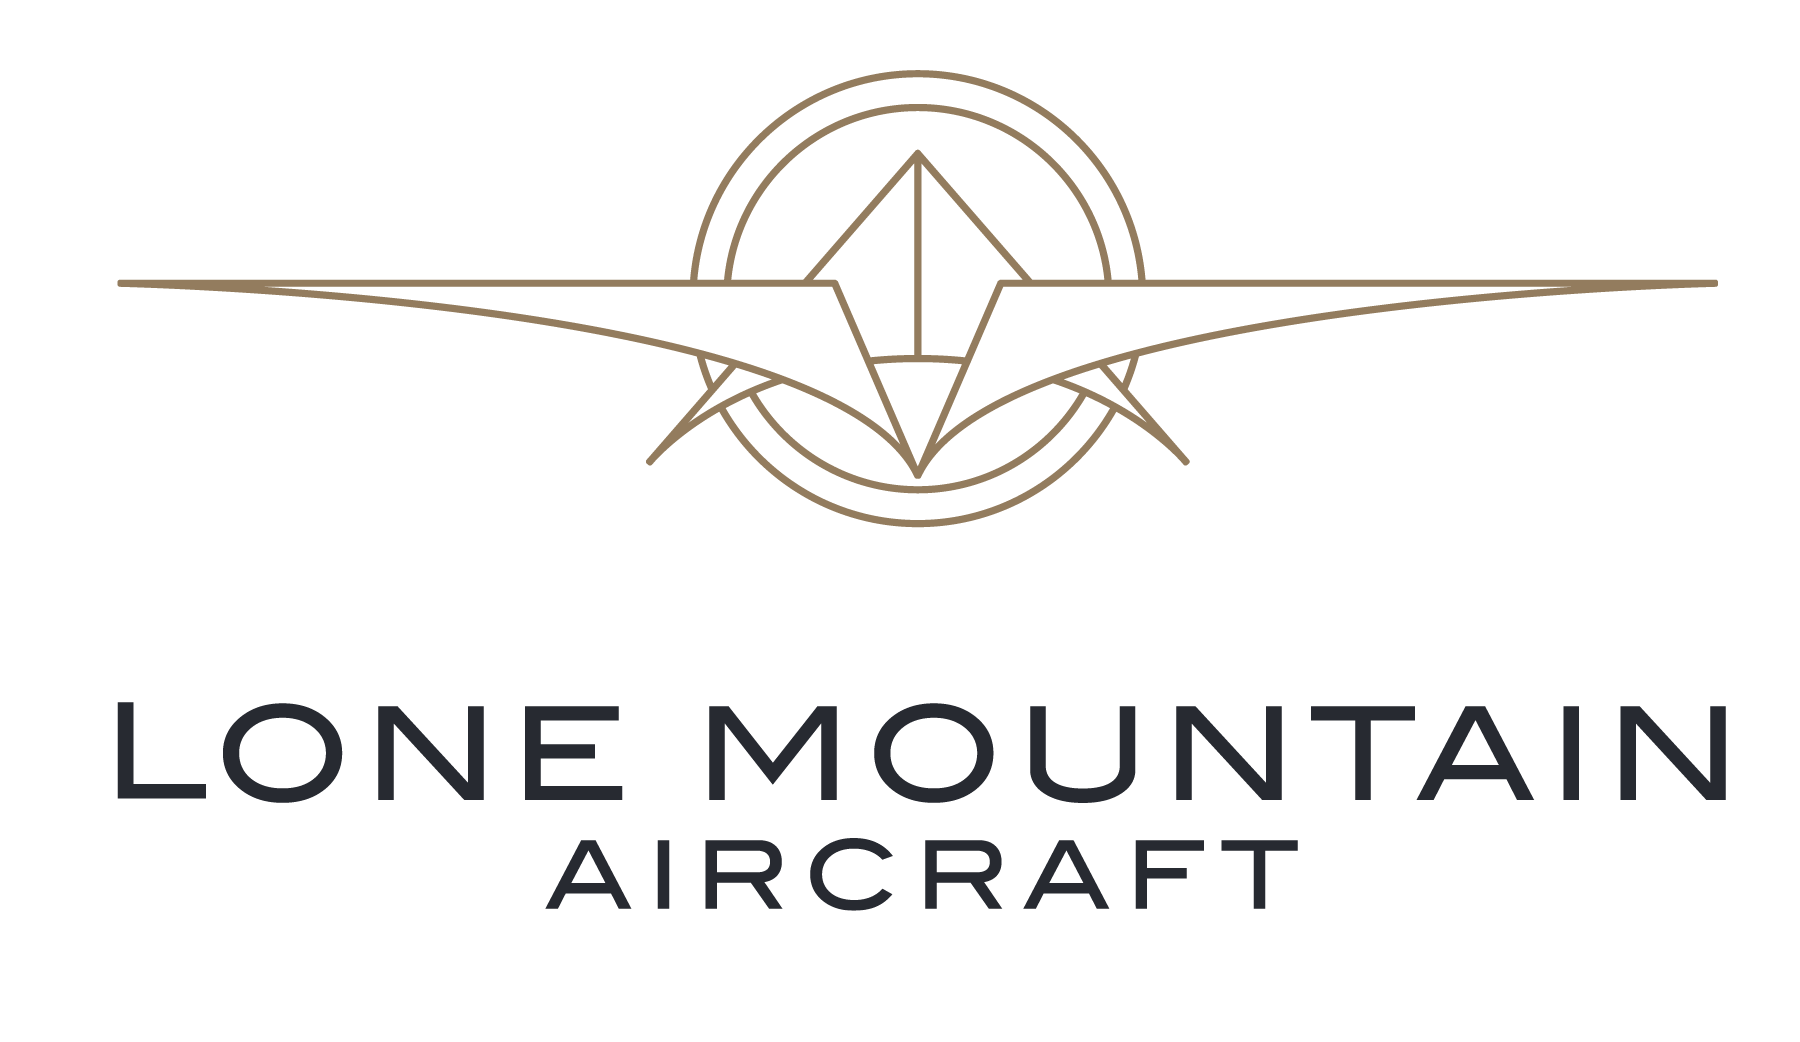 Lone Mountain Aircraft logo